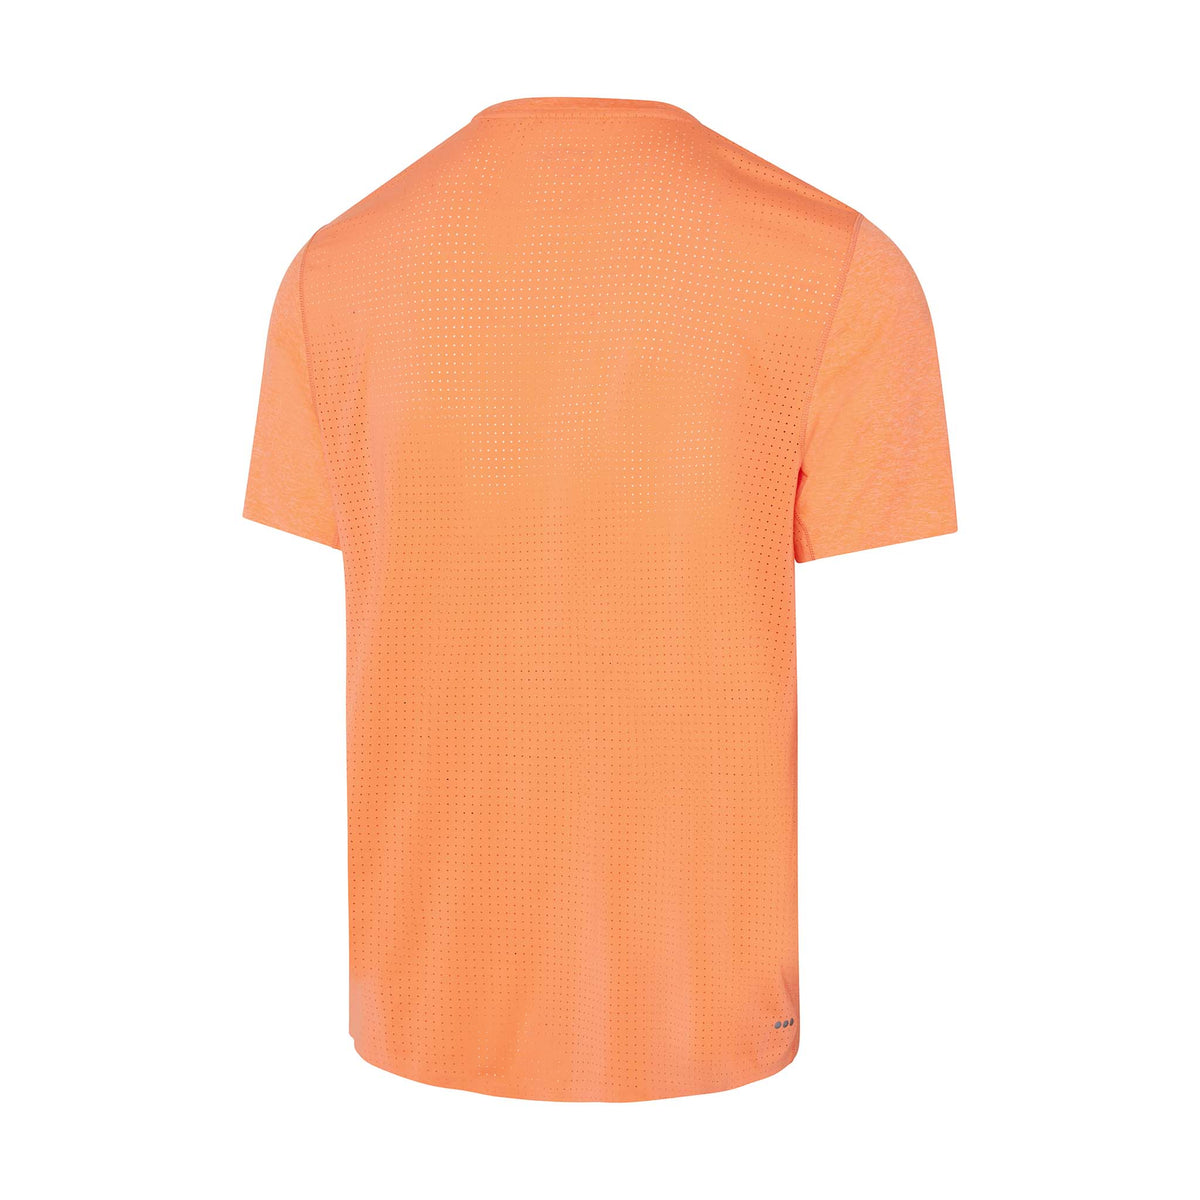 Saucony Time Trial Short Sleeve T-shirt vizi orange homme dos